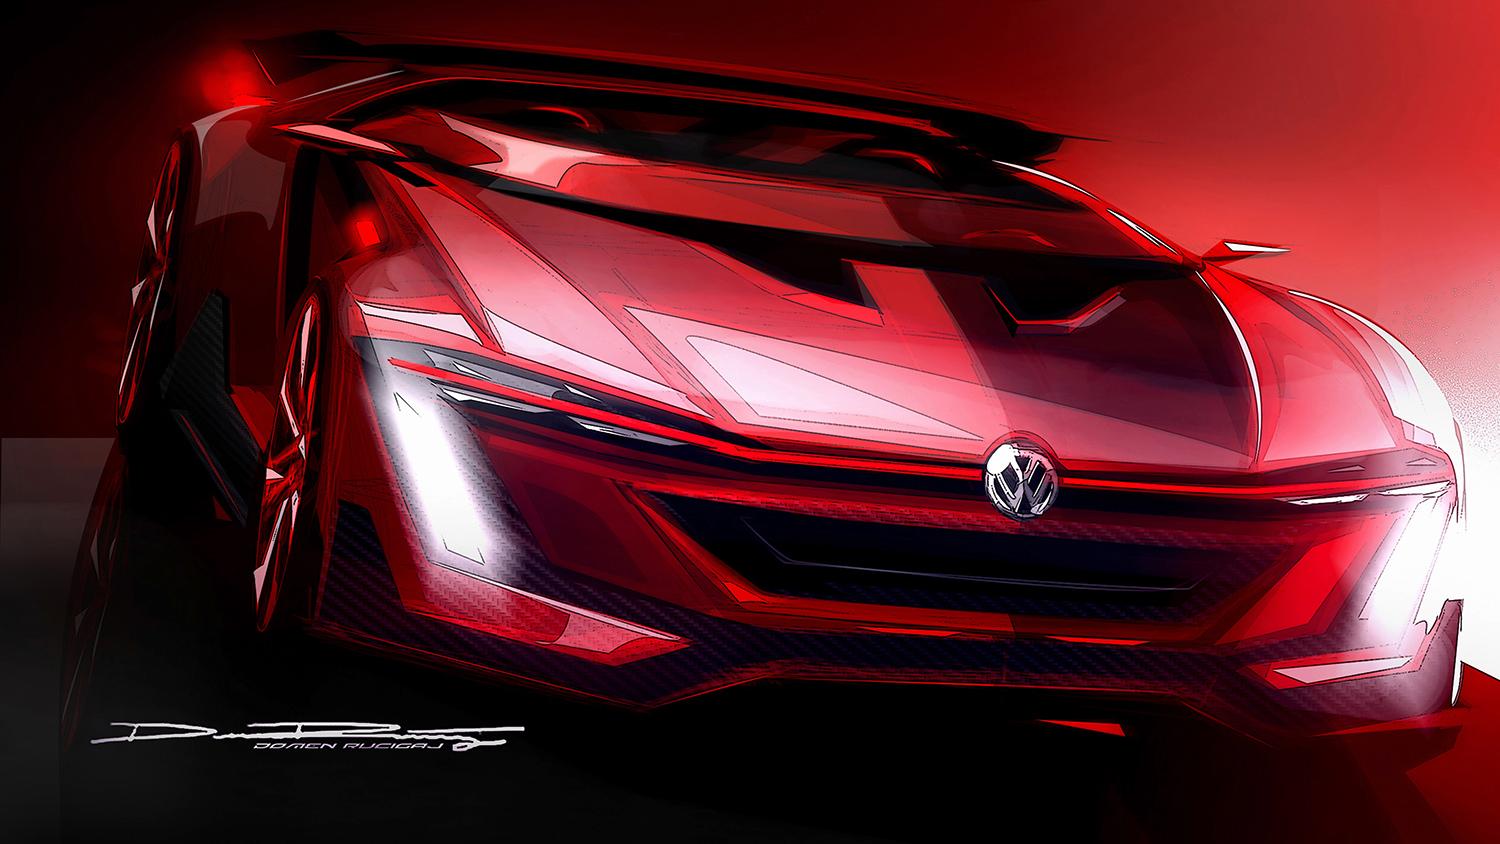 VW GTI Roadster Vision Gran Turismo